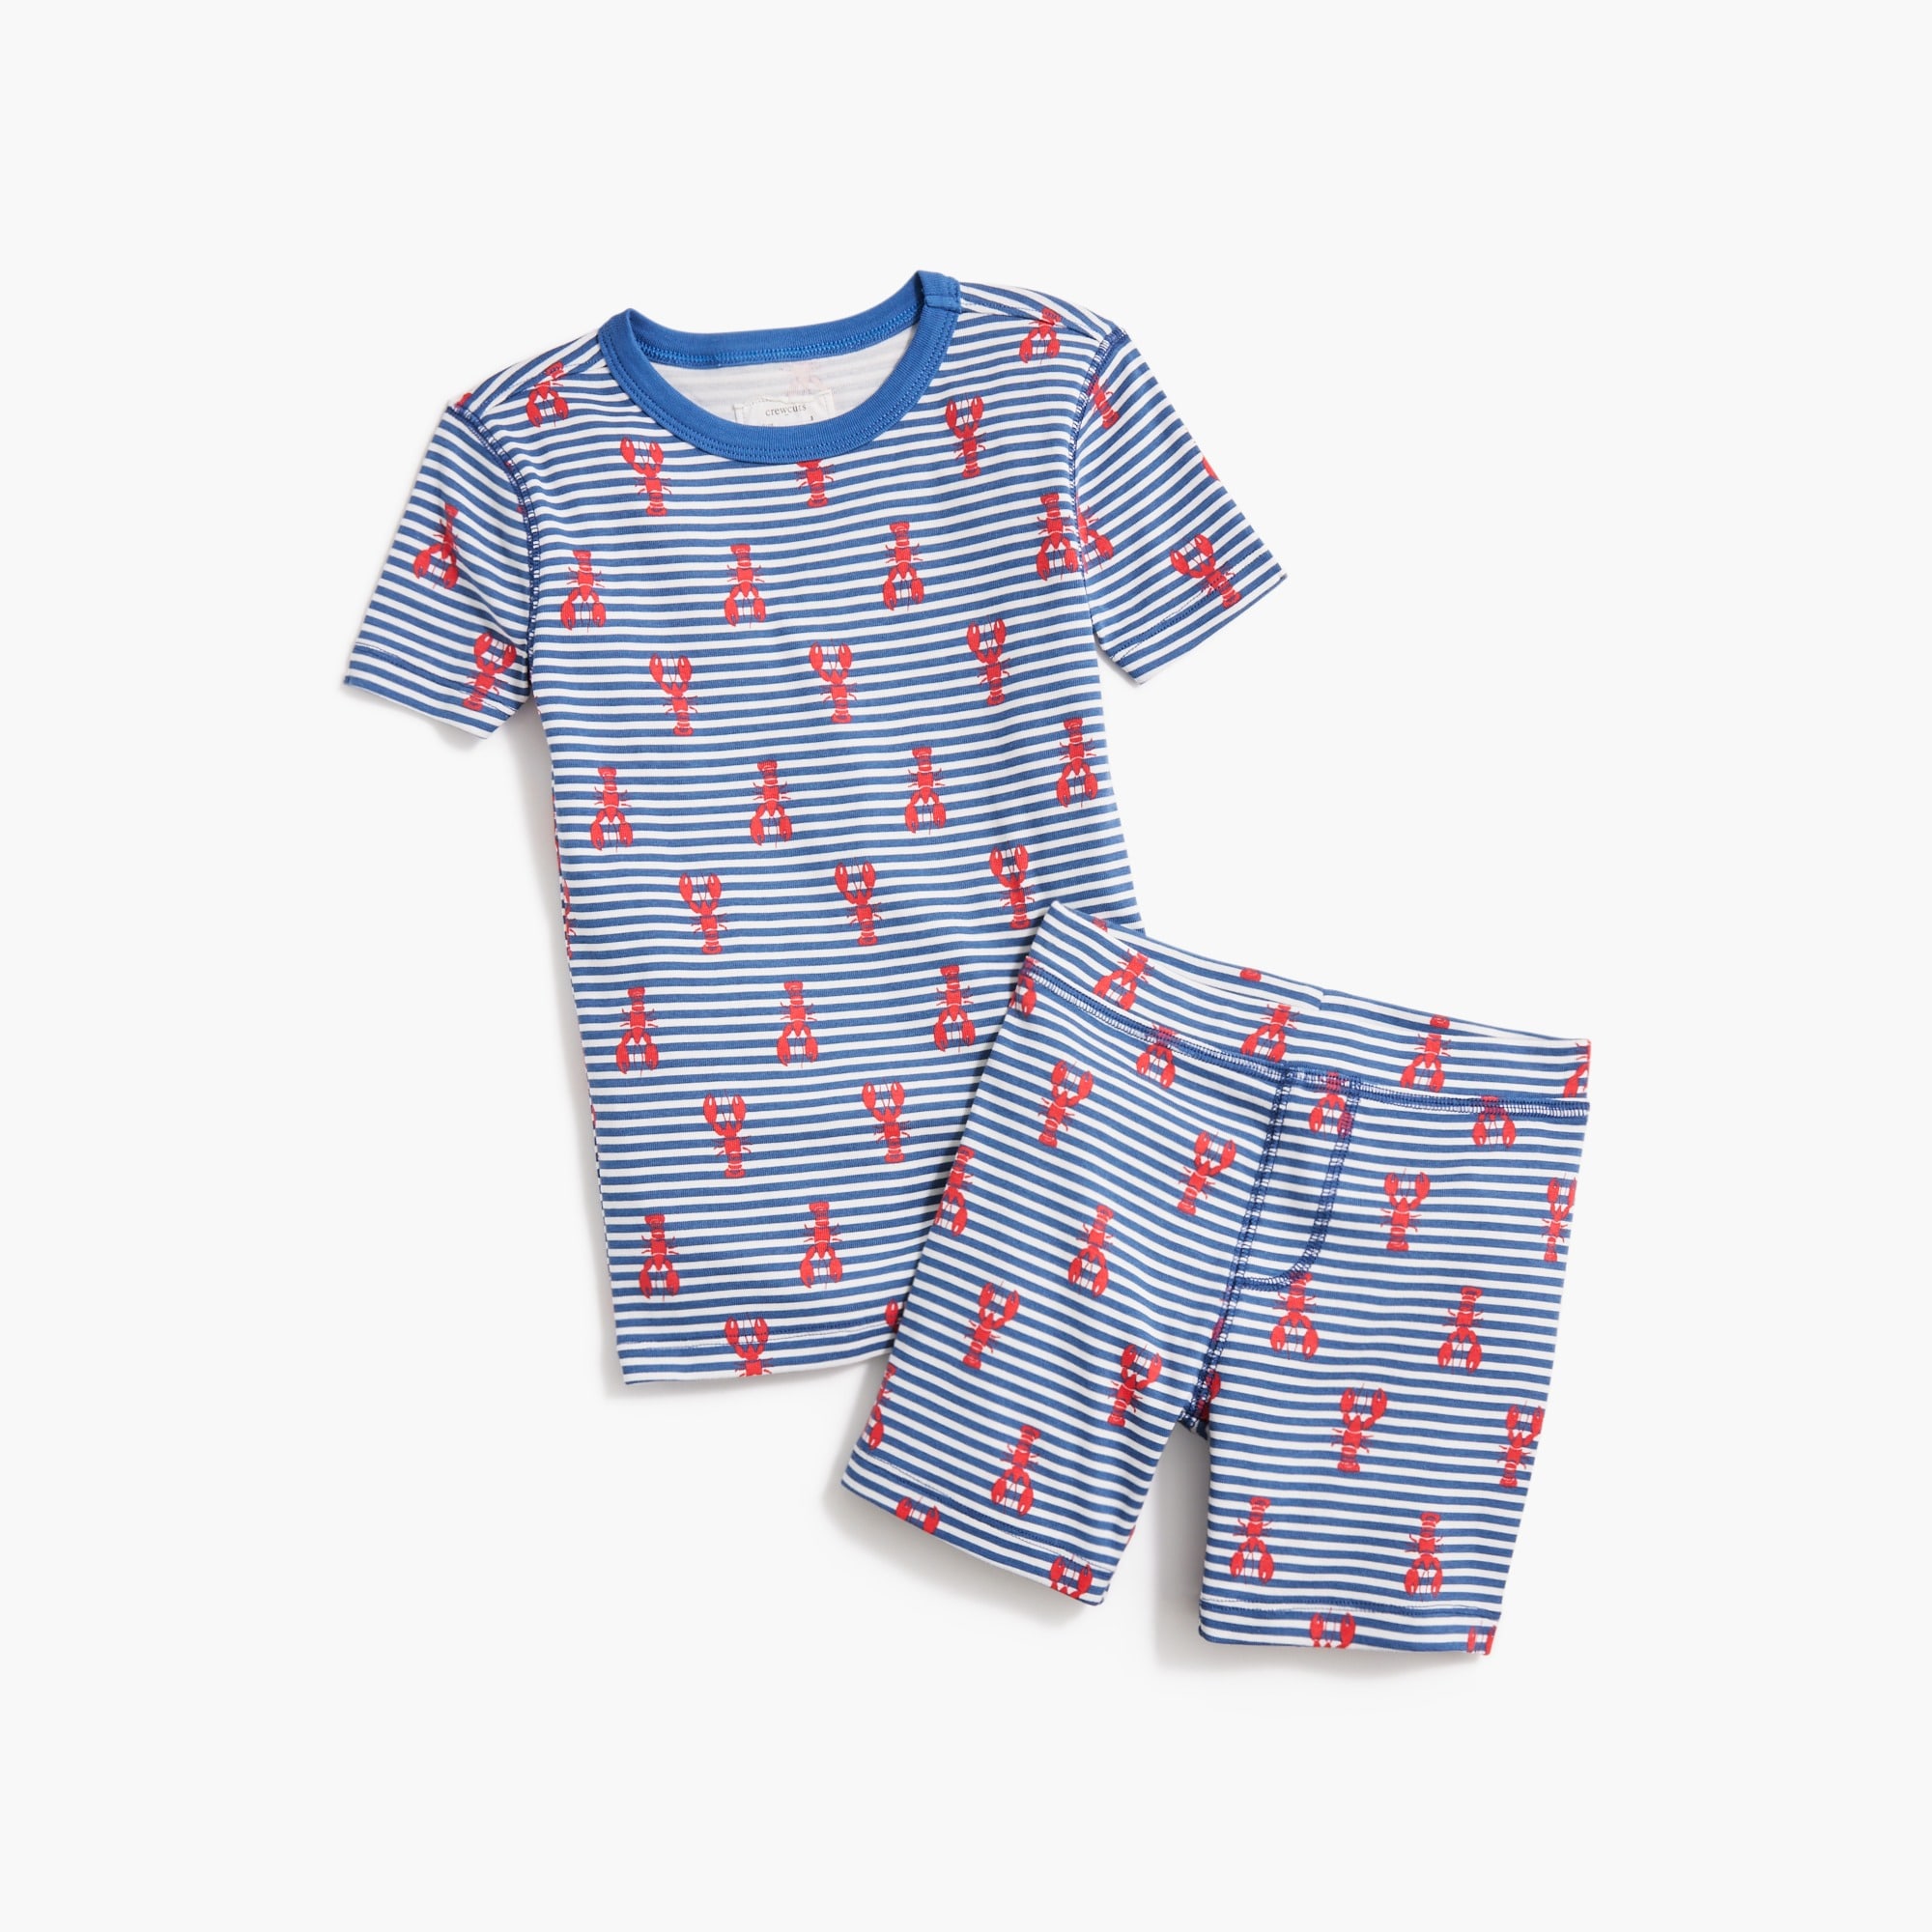 Kids' lobster pajama set